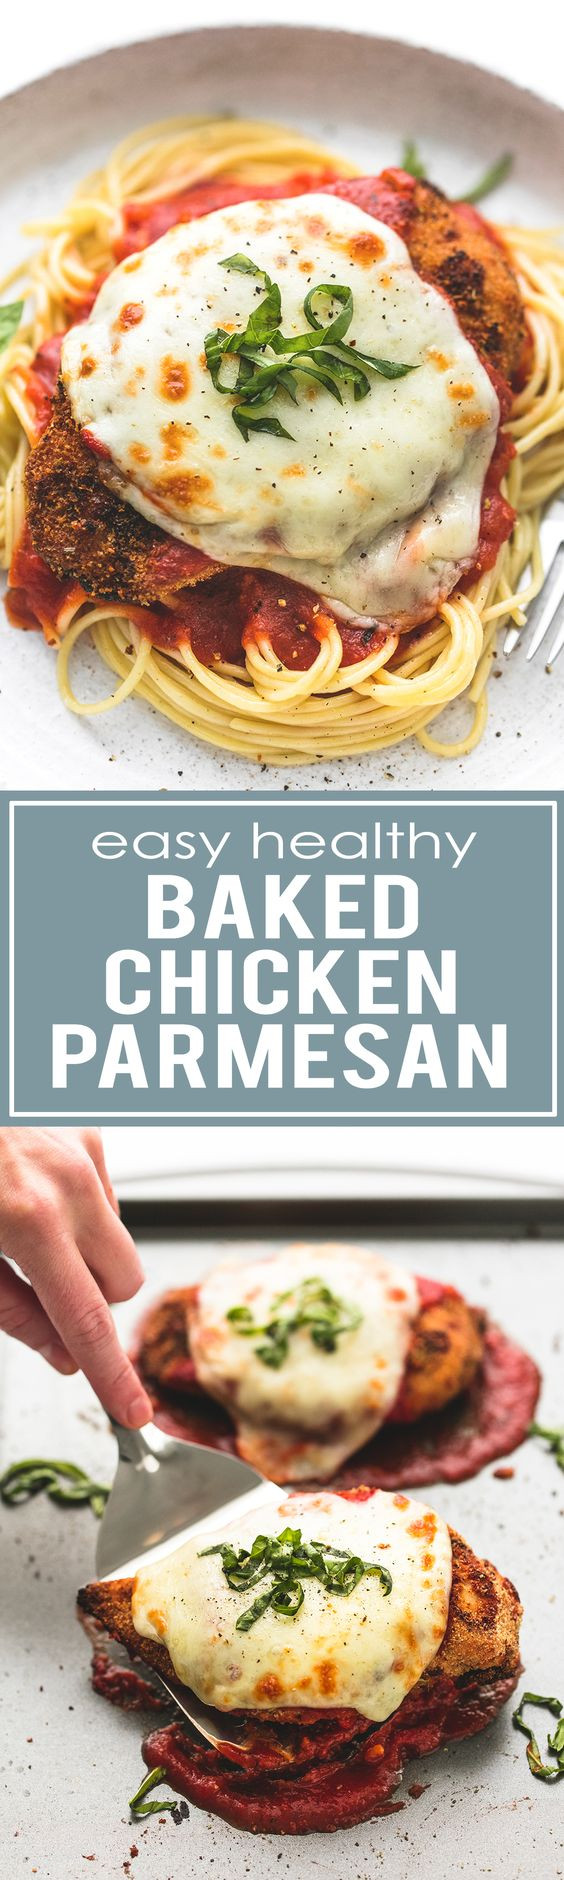 Heart Healthy Baked Chicken Recipes
 Pinterest • The world’s catalog of ideas